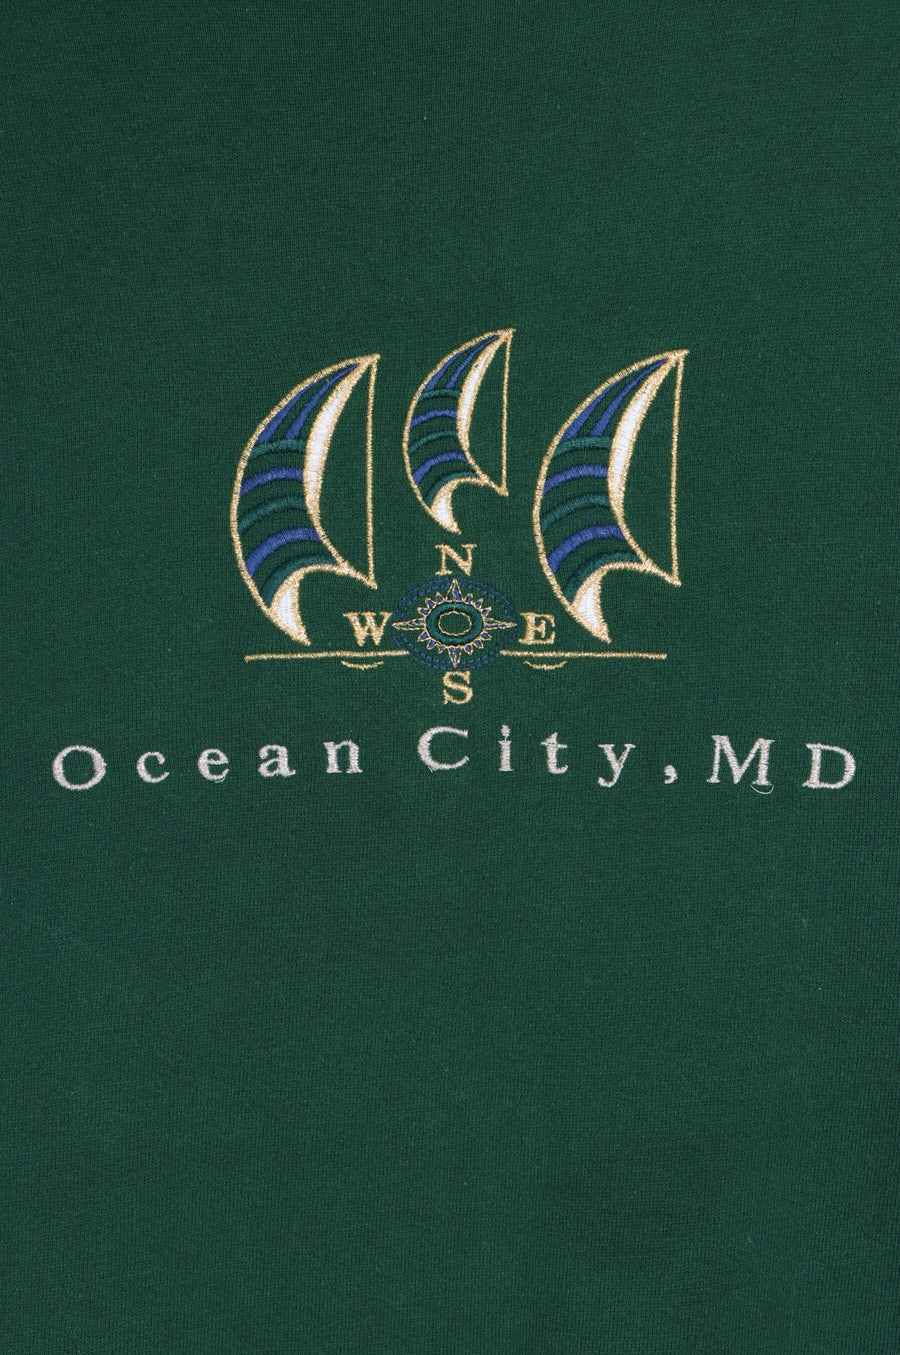 Ocean City Metallic Embroidered Sail Boats Sweatshirt USA Made (L-XL)